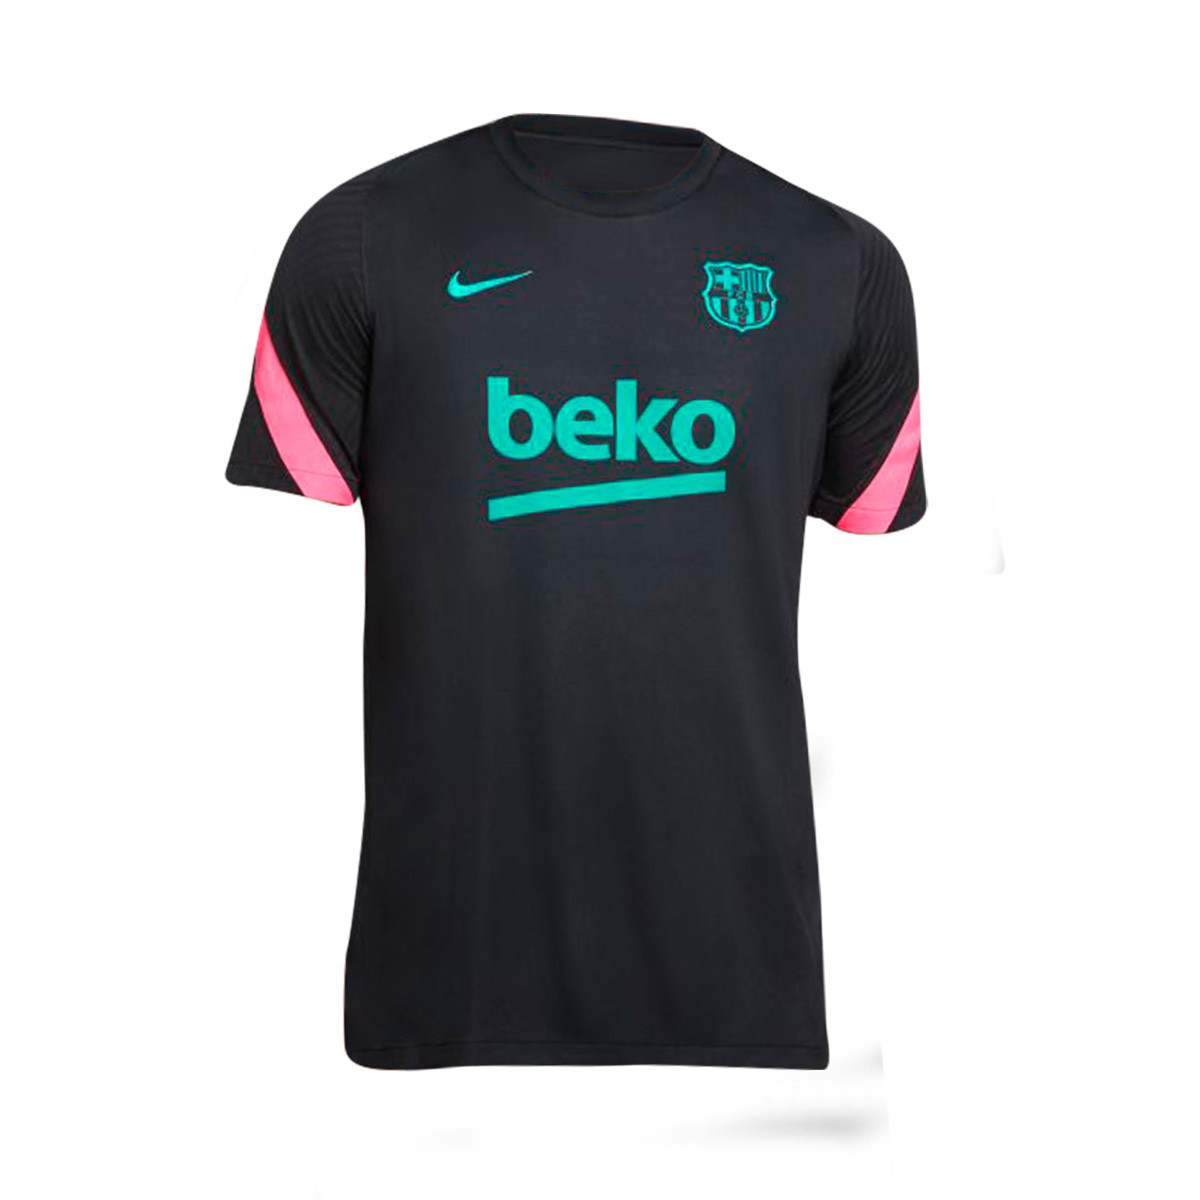 fc barcelona green jersey